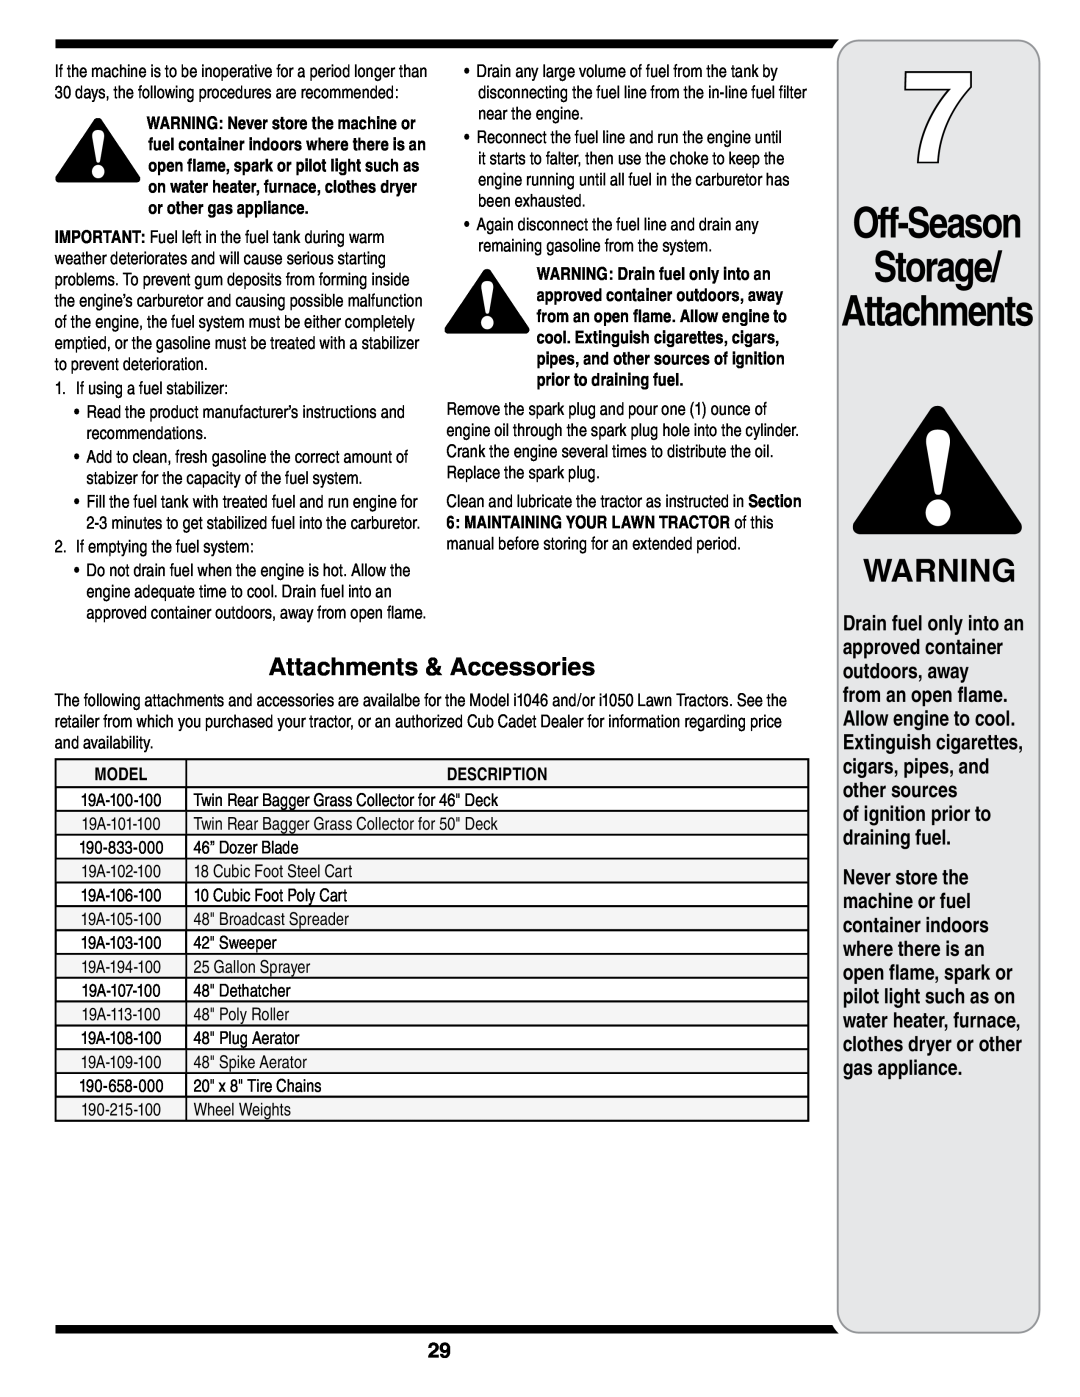 MTD i1046, i1050 Off-Season Storage, Attachments & Accessories, of ignition prior to draining fuel, Model, Description 